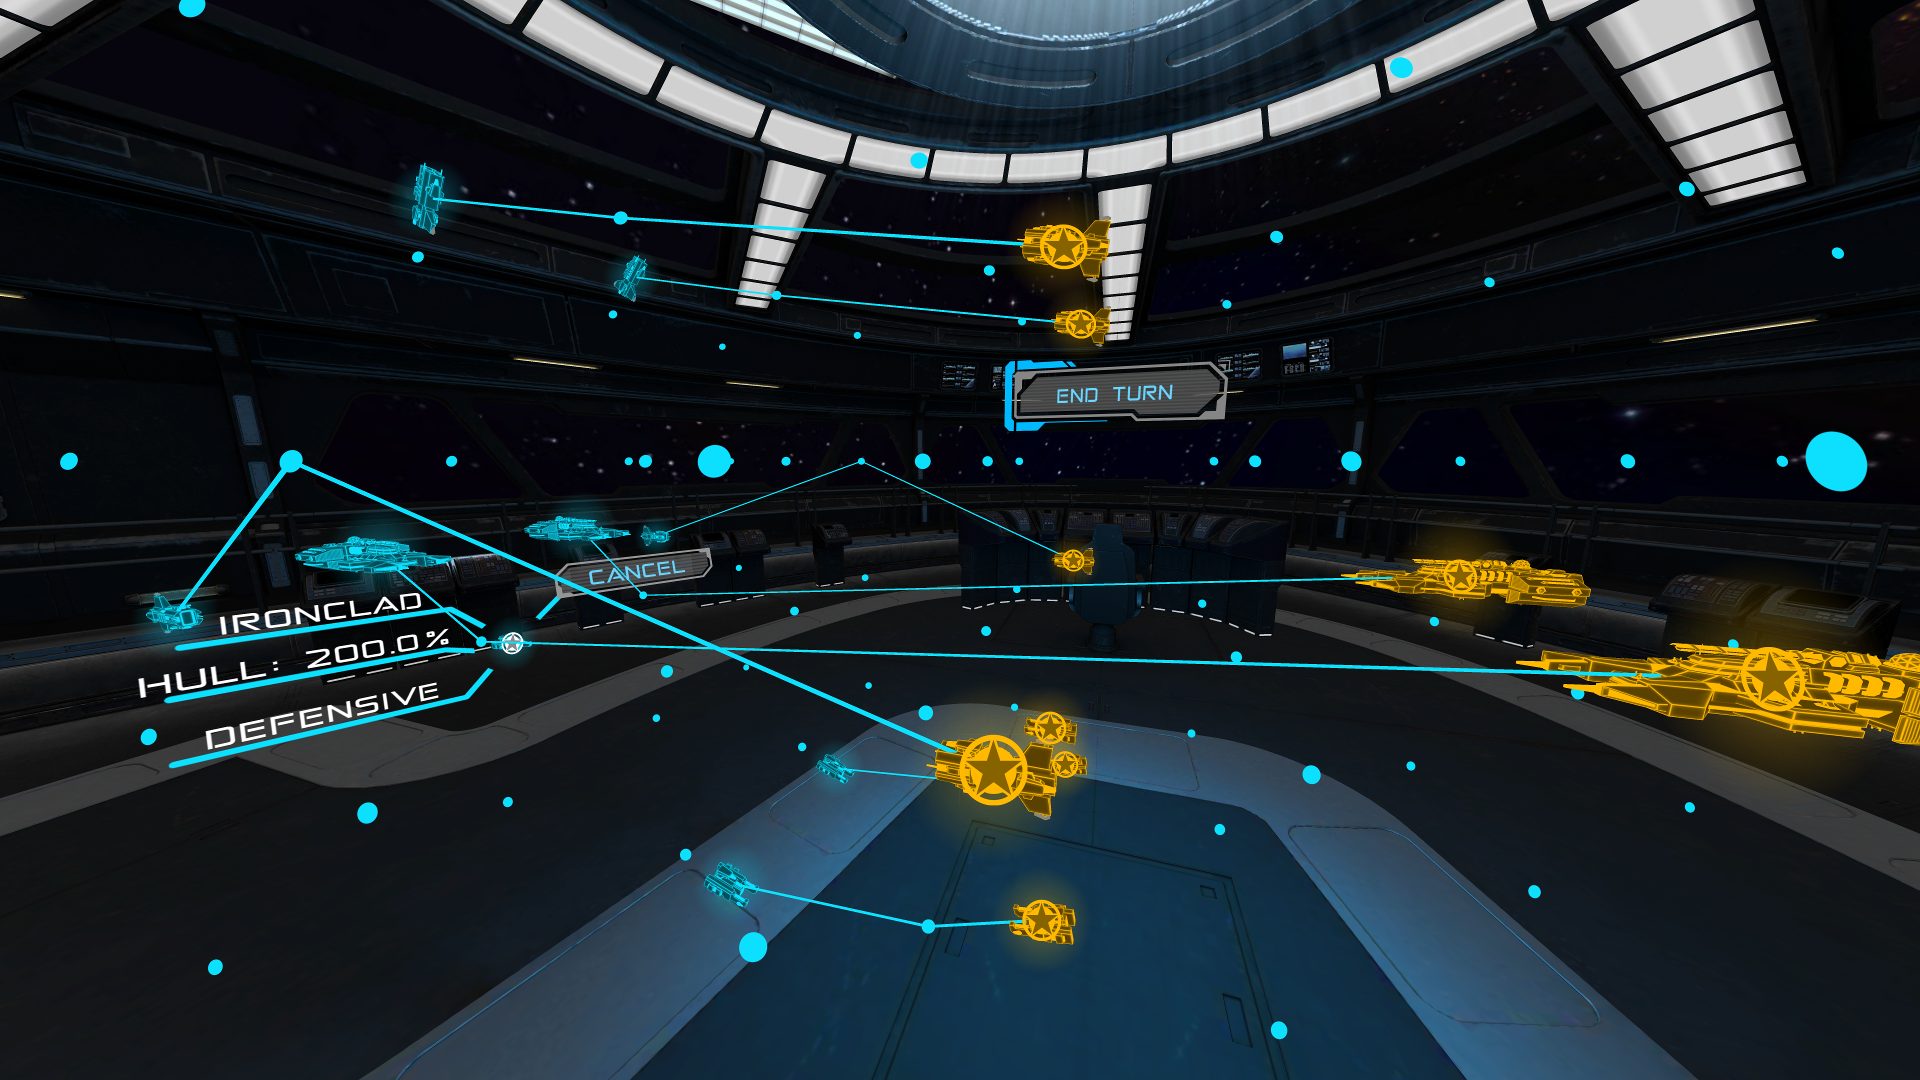 Новая VR стратегия Skylight для Gear VR выходит 12 января